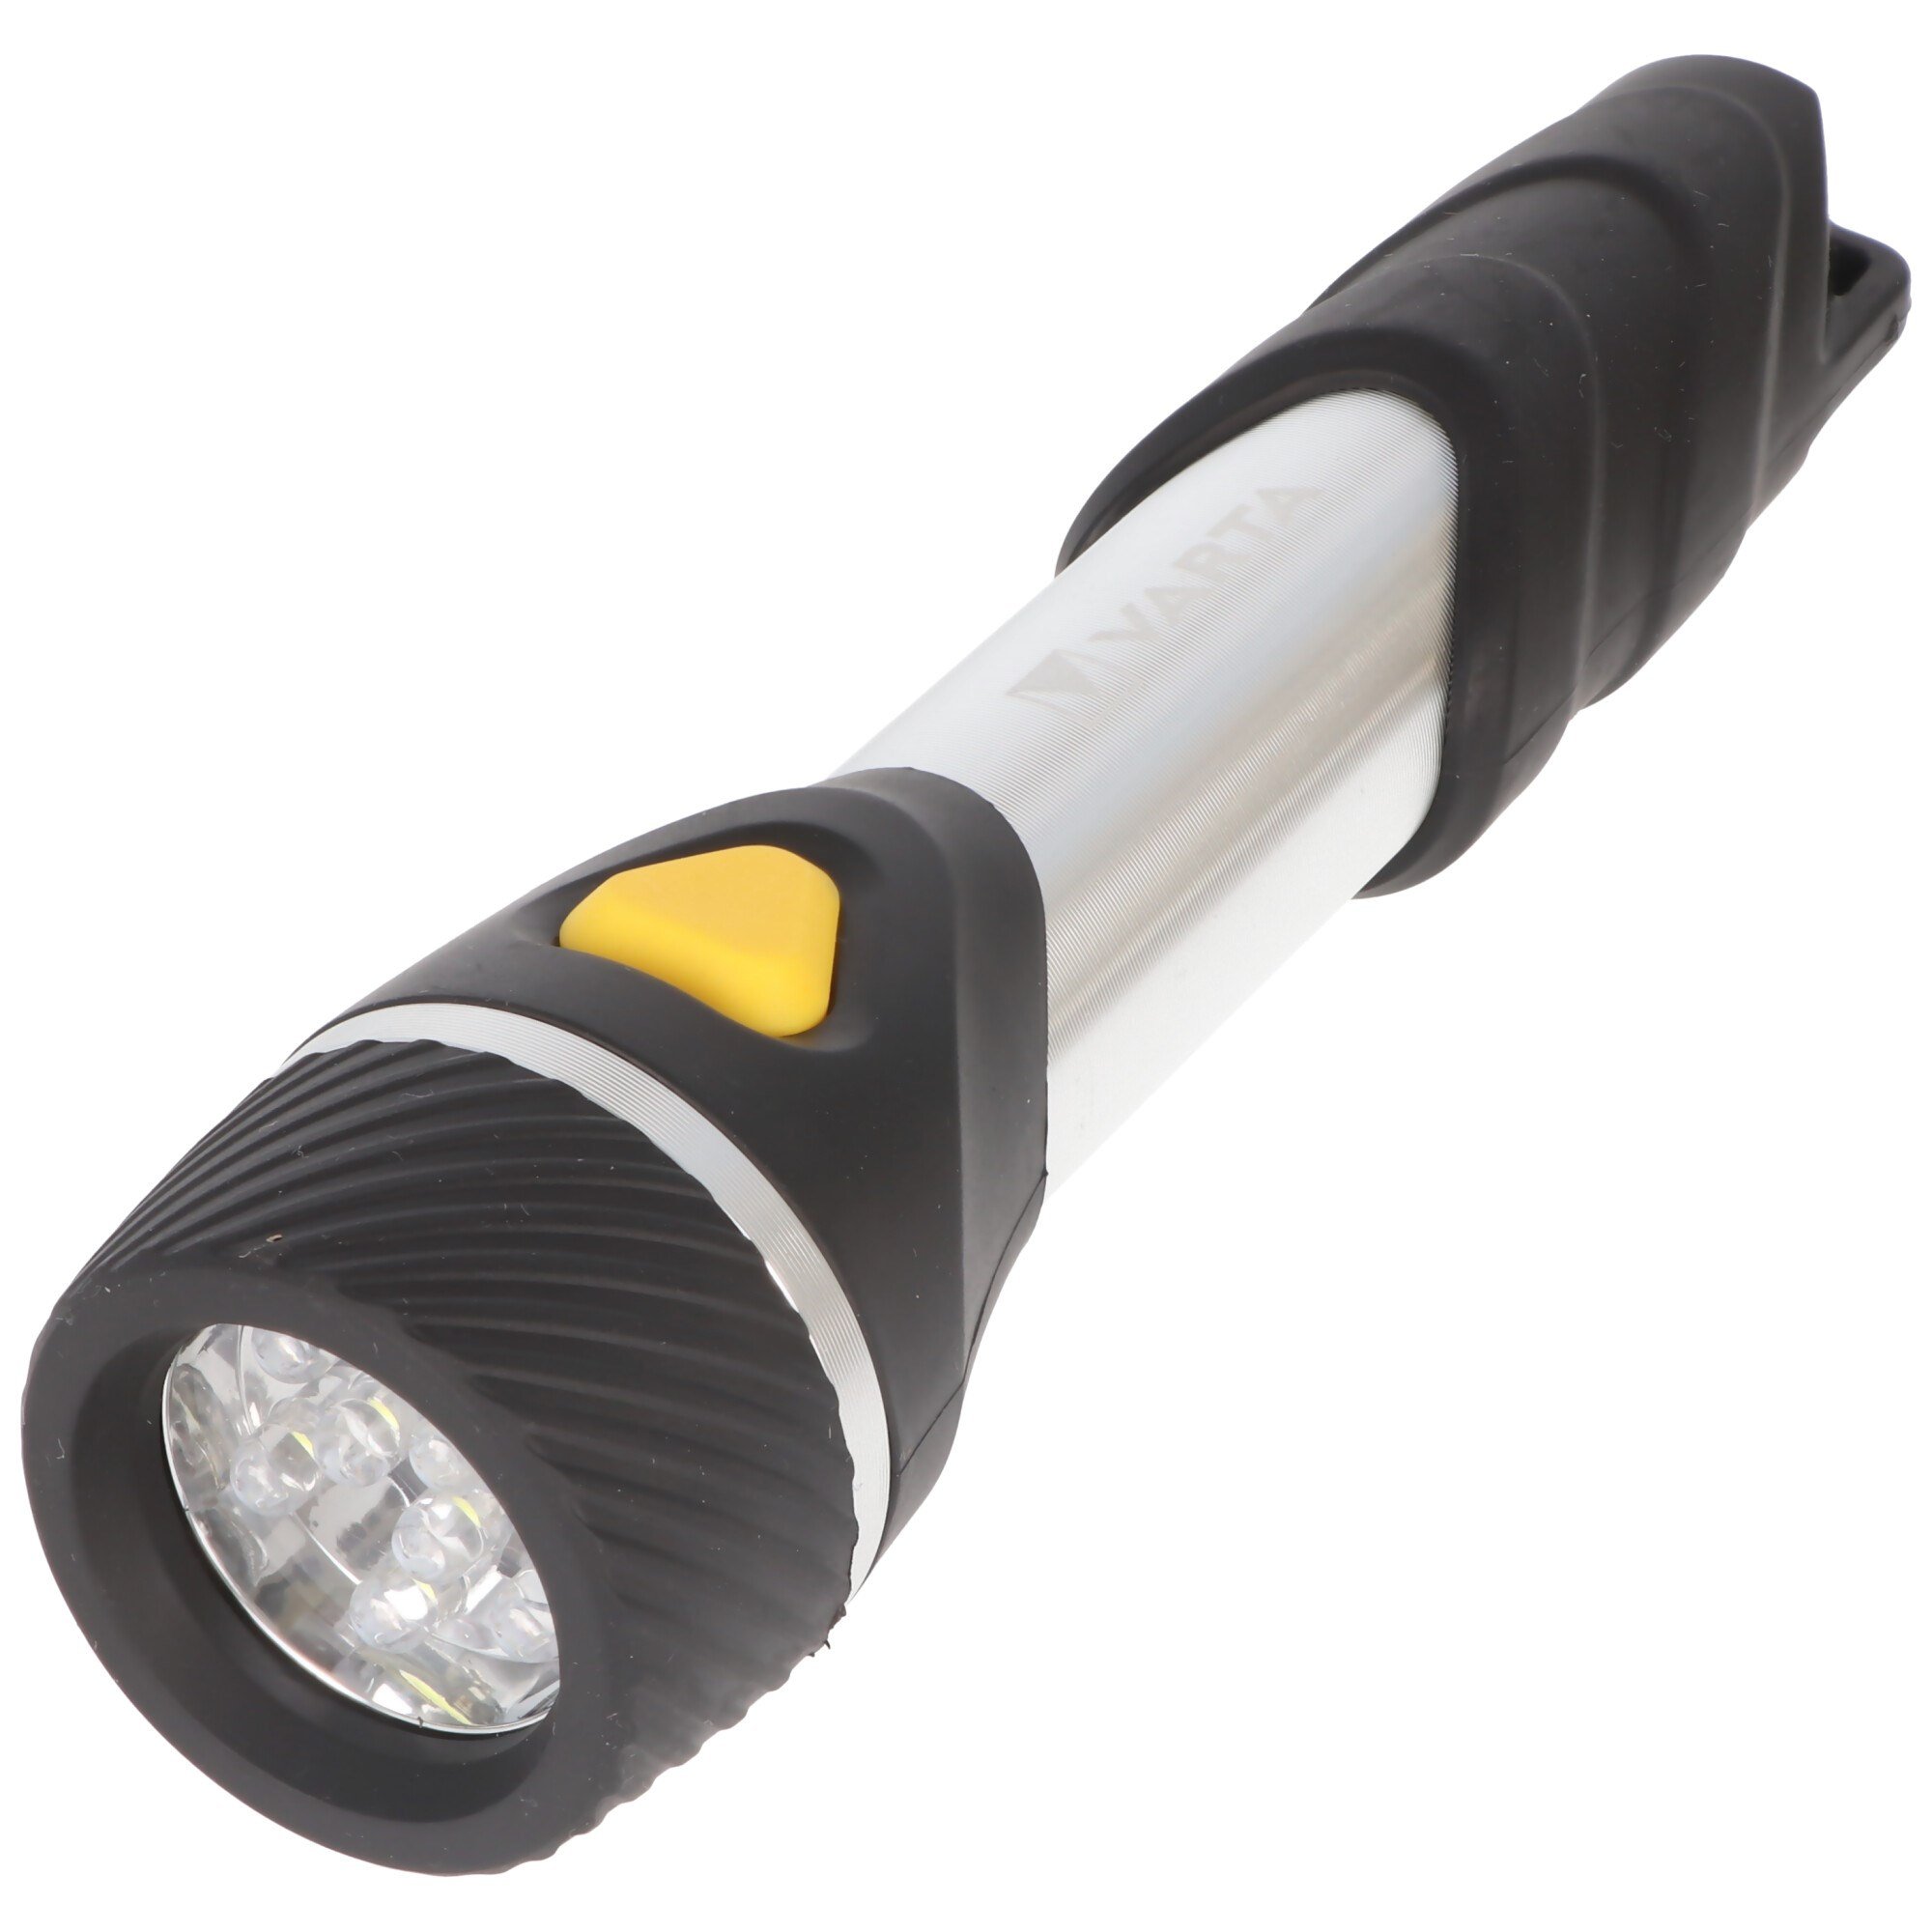 Varta LED el feneri Gün Işığı, Çoklu LED F20 40lm, 2x alkalin AA piller  dahil, perakende